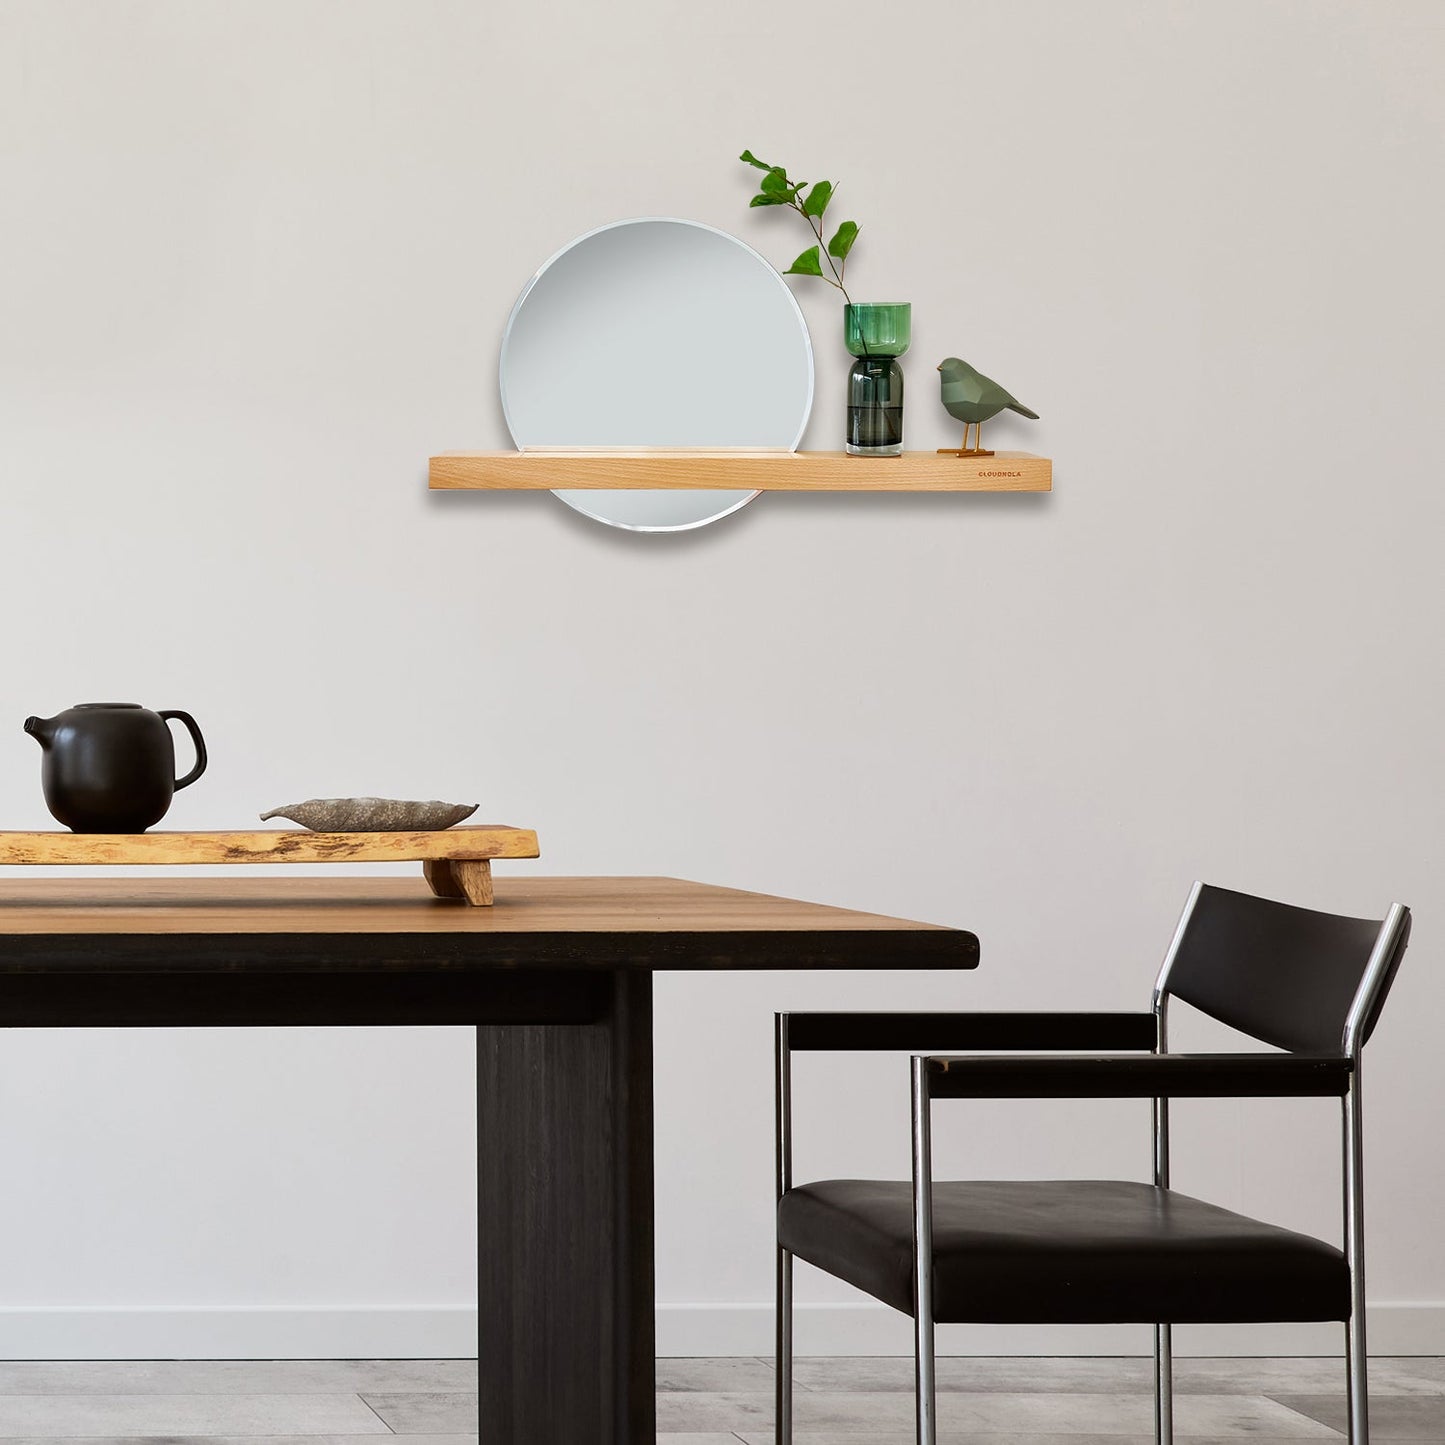 SAMPLE - Shelfie Mirror and Shelf - Elegant Inlay Design - Minimalist Decor Piece